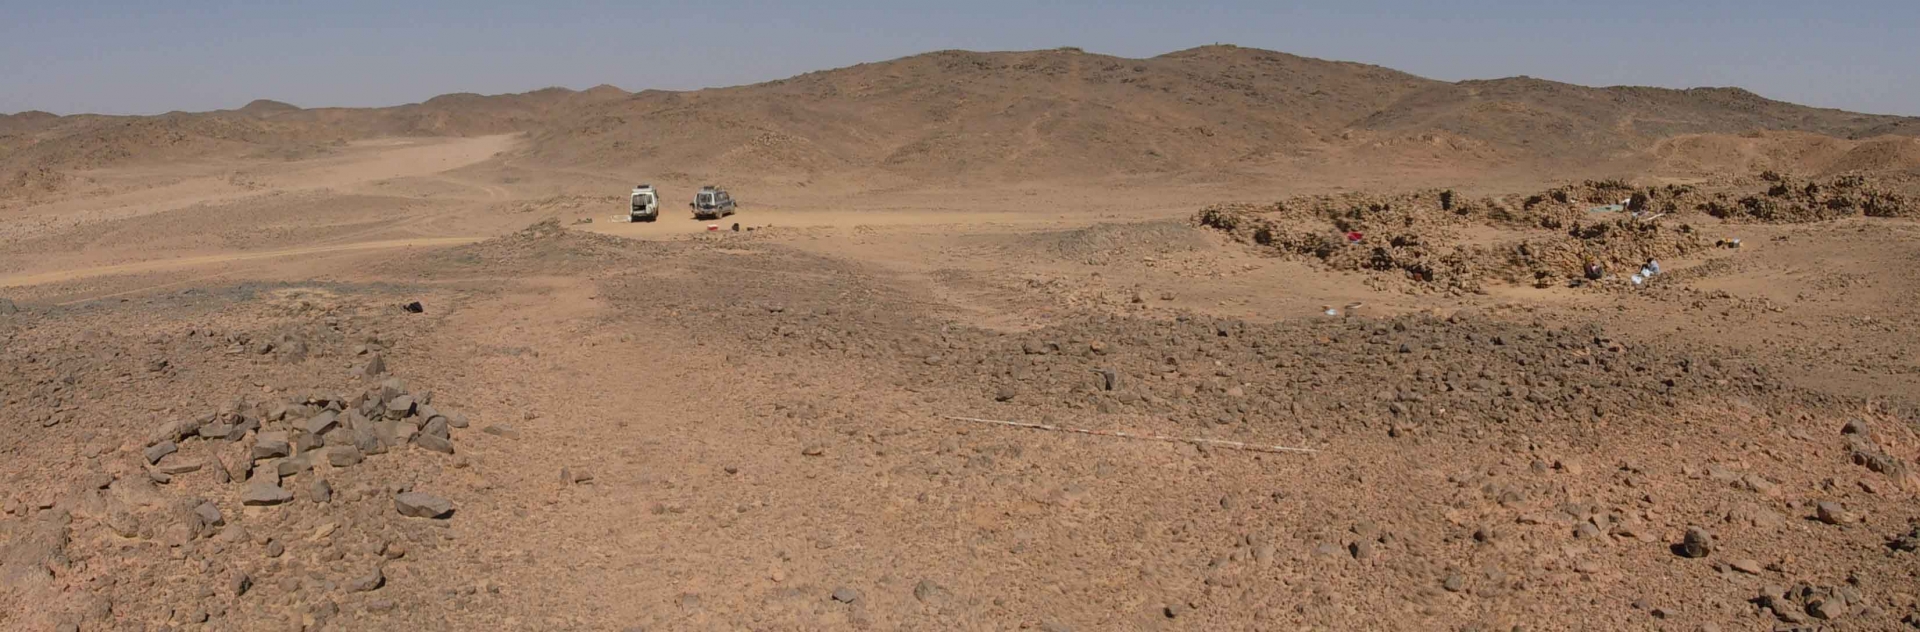 desert of Wadi el-Hudi, Egypt